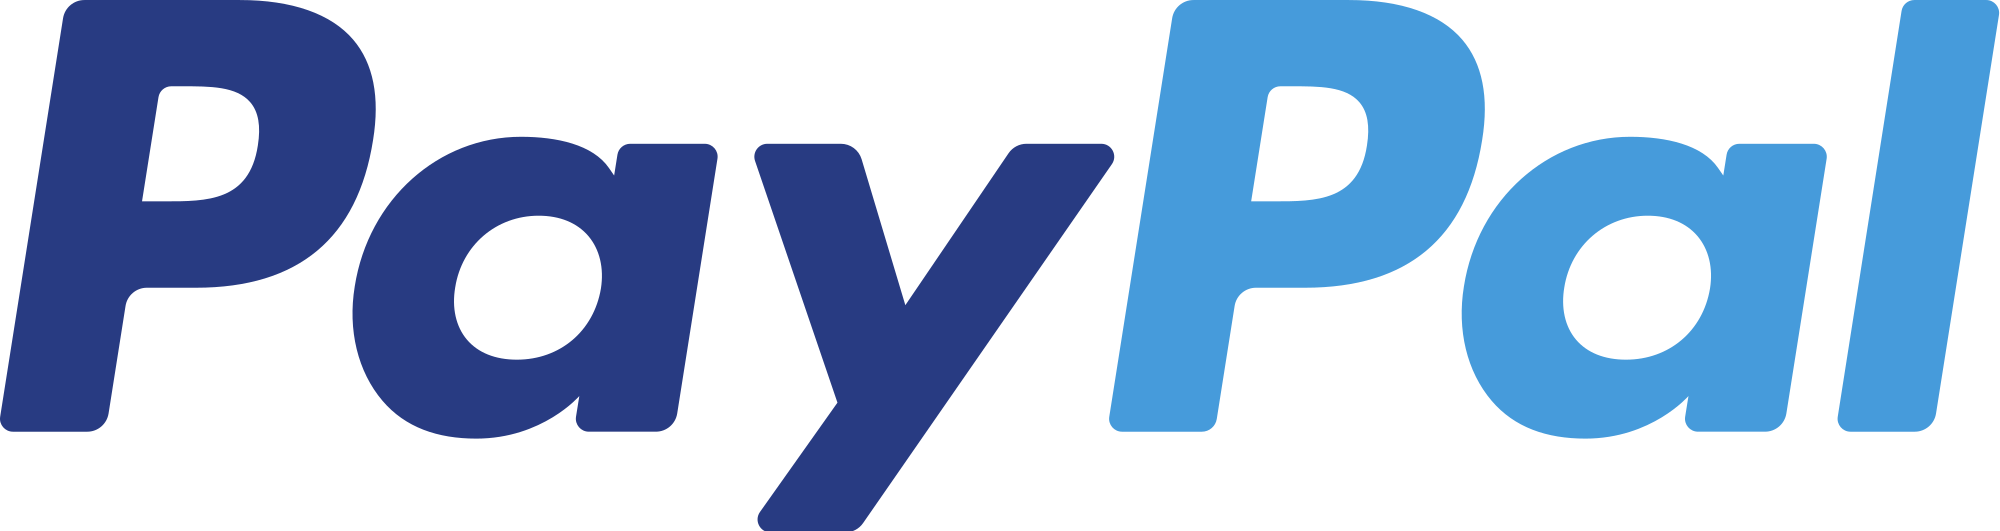 Paypalのロゴ